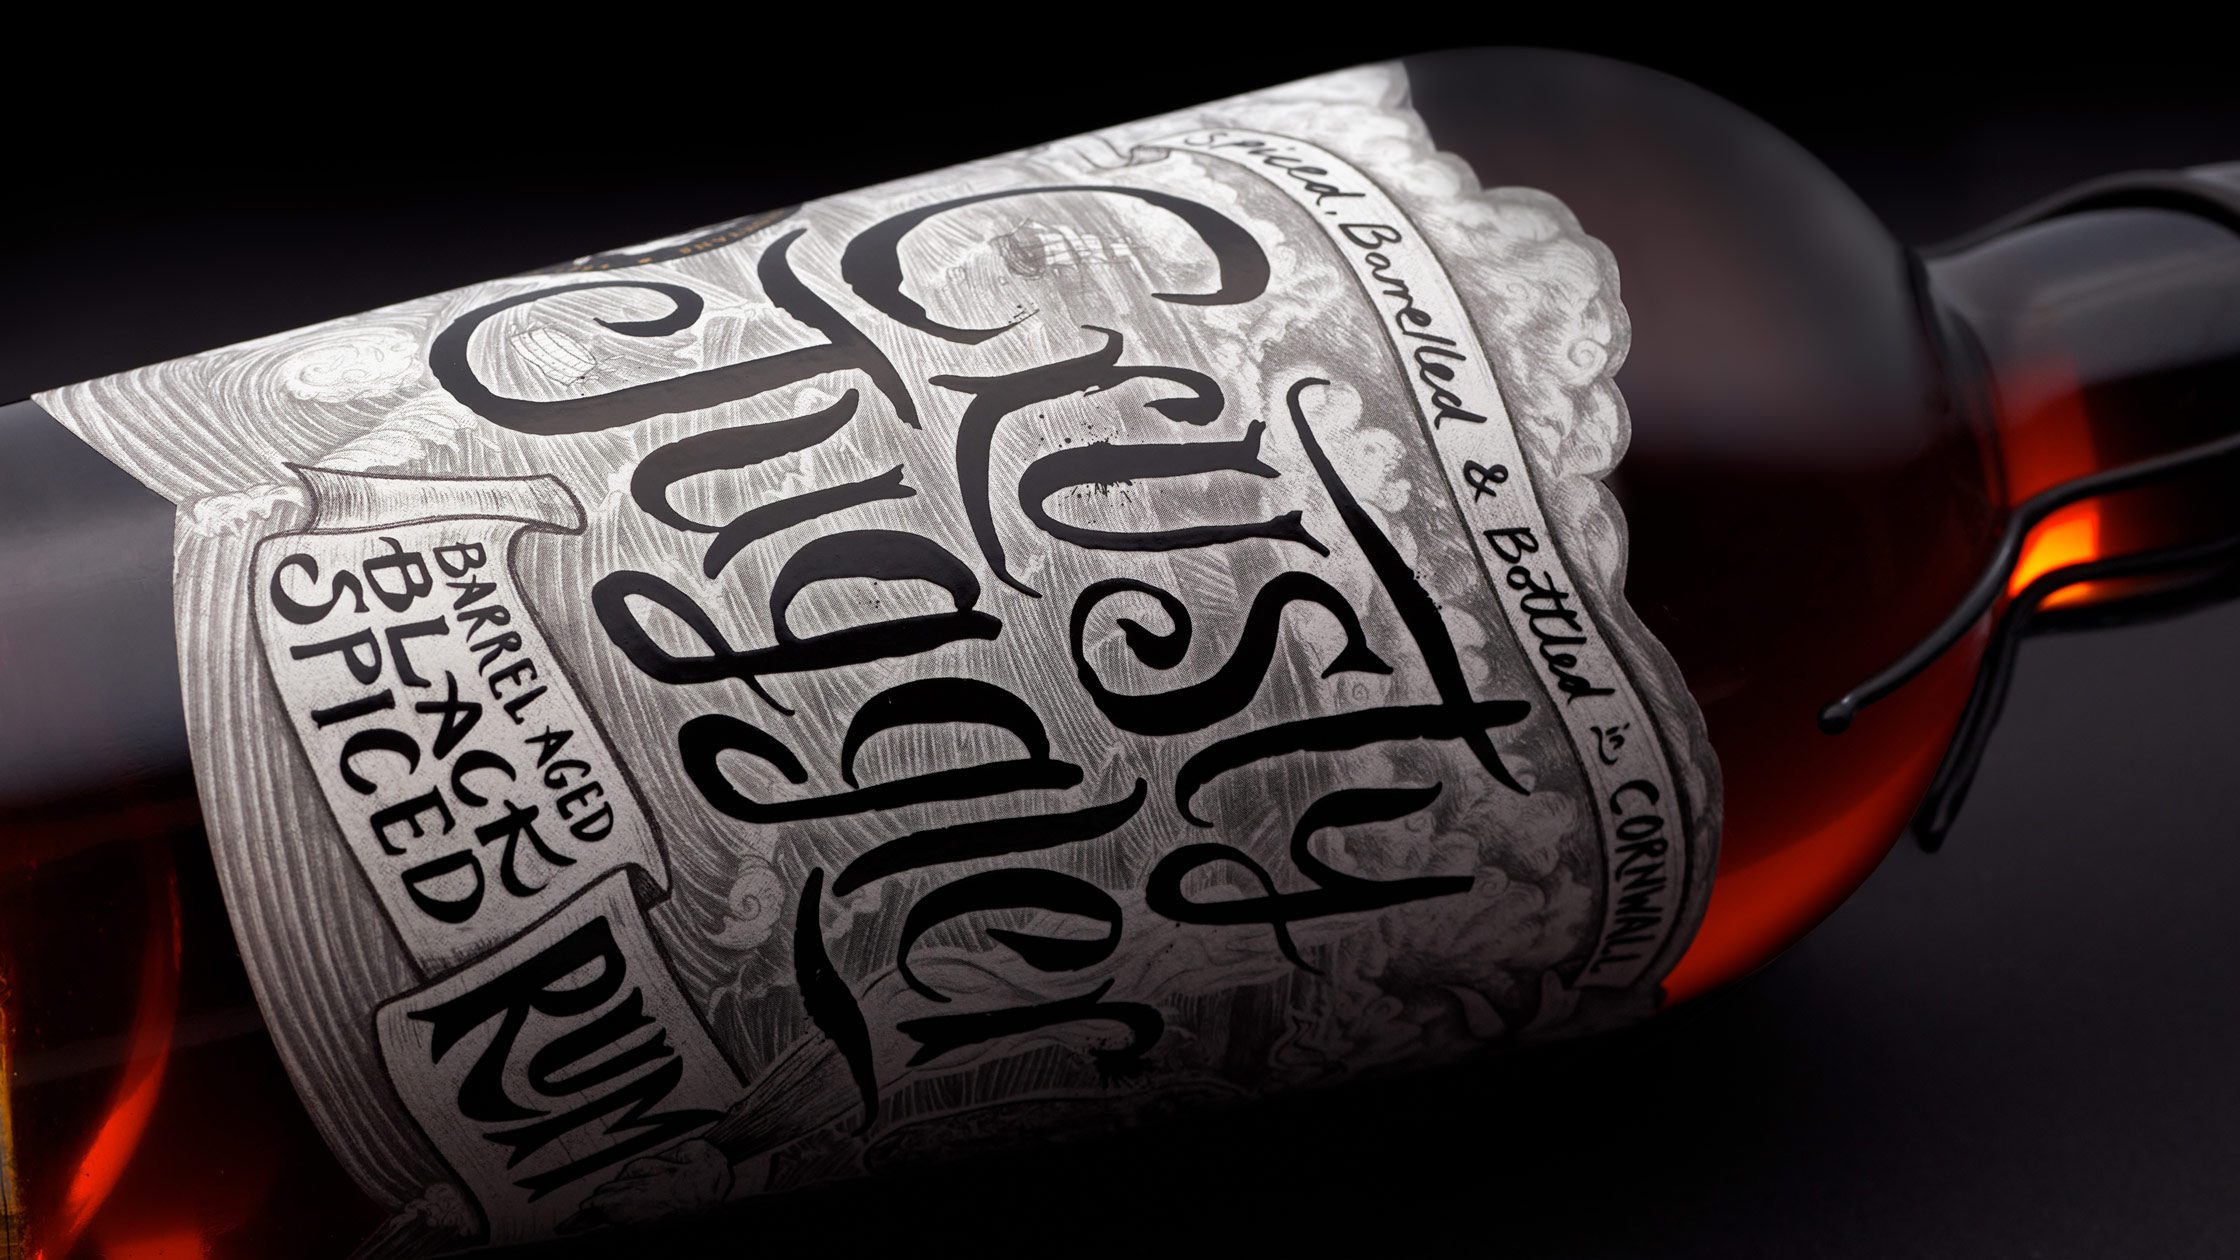 Spiced rum branding for Crusty Juggler by Kingdom & Sparrow